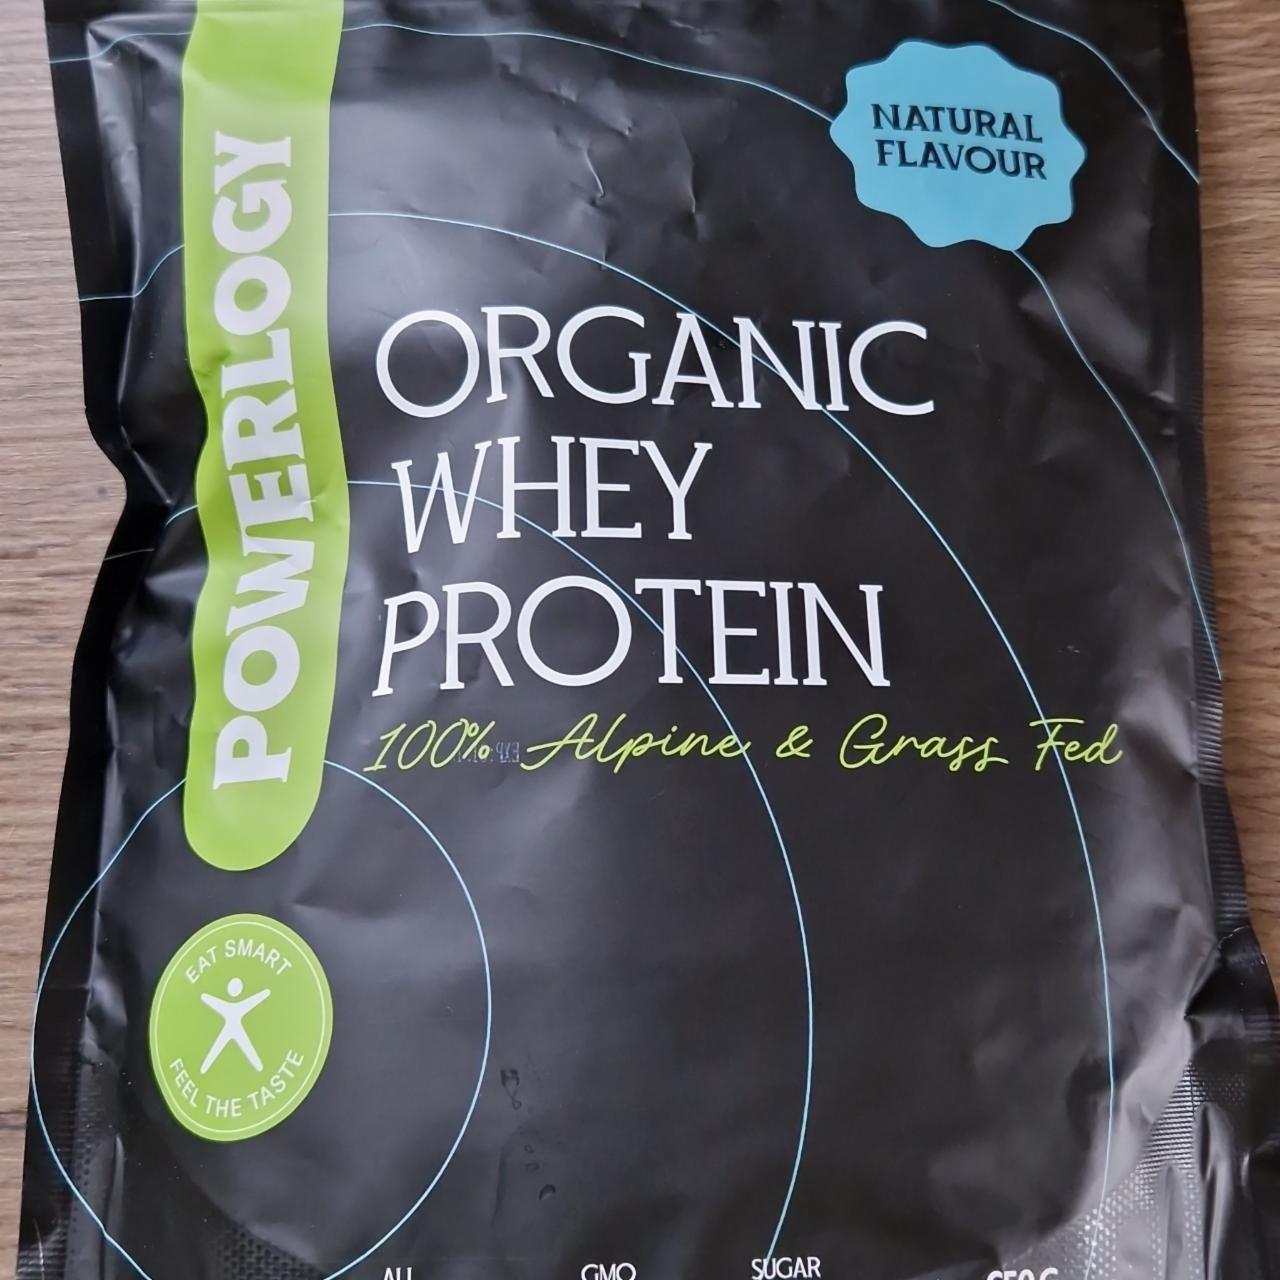 Fotografie - Organic whey protein Natural flavour Powerlogy